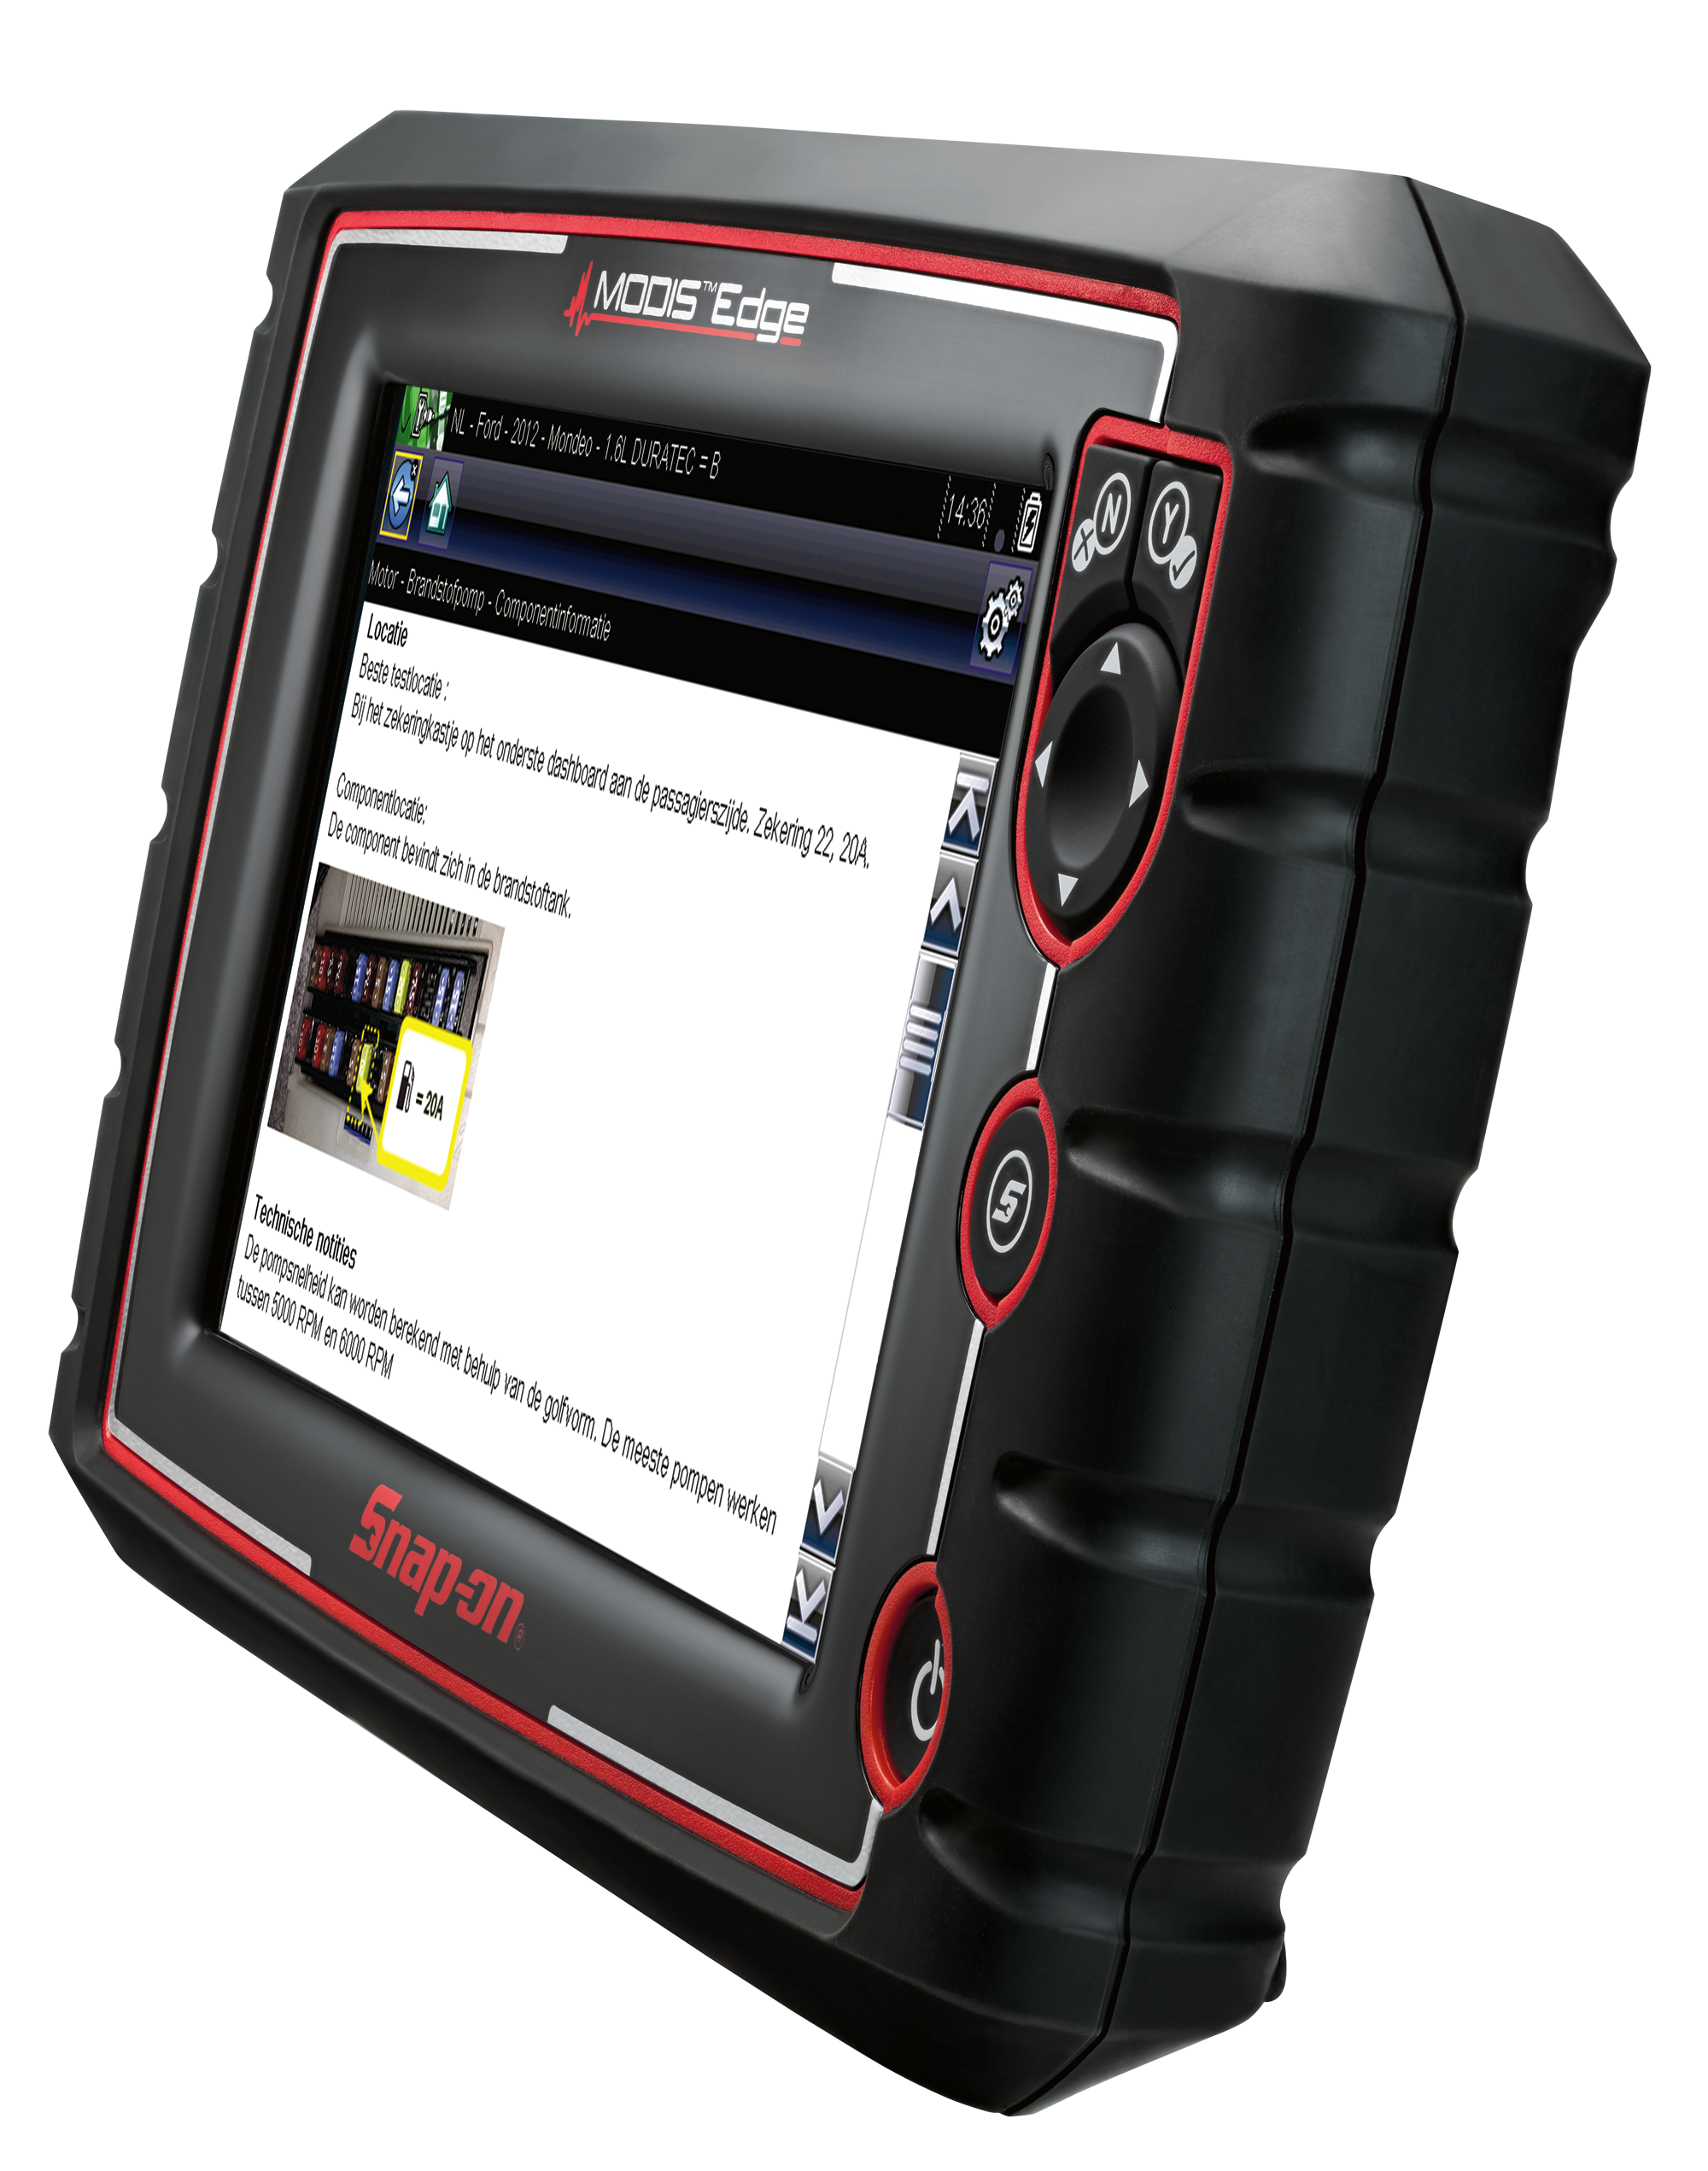 Modis Edge™ - Met Component testmeter in uw diagnose apparaat